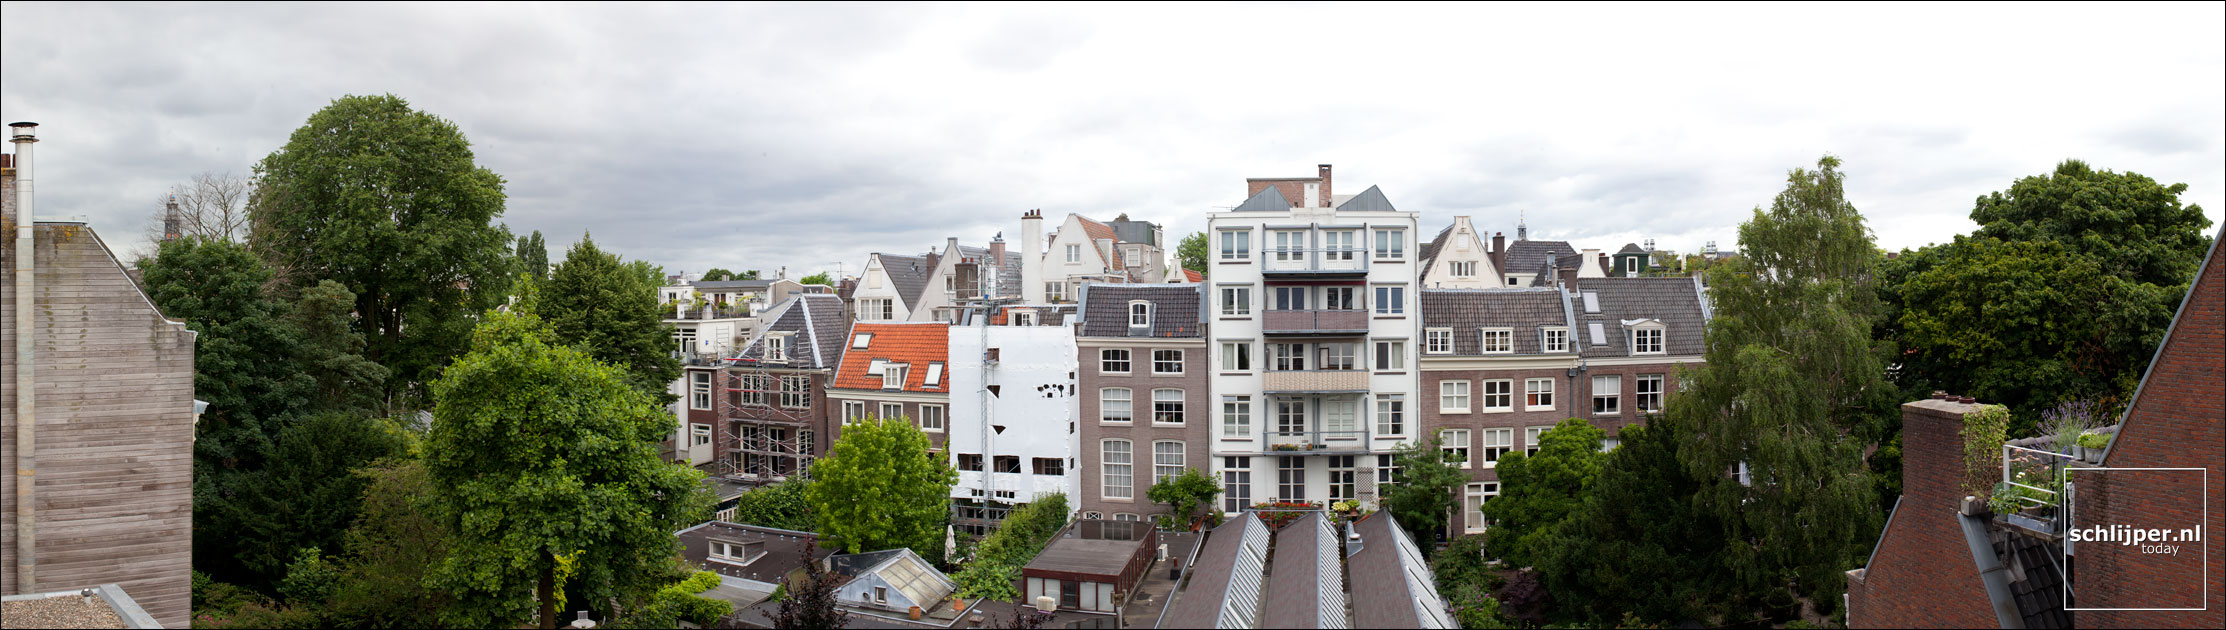 Nederland, Amsterdam, 16 juli 2012